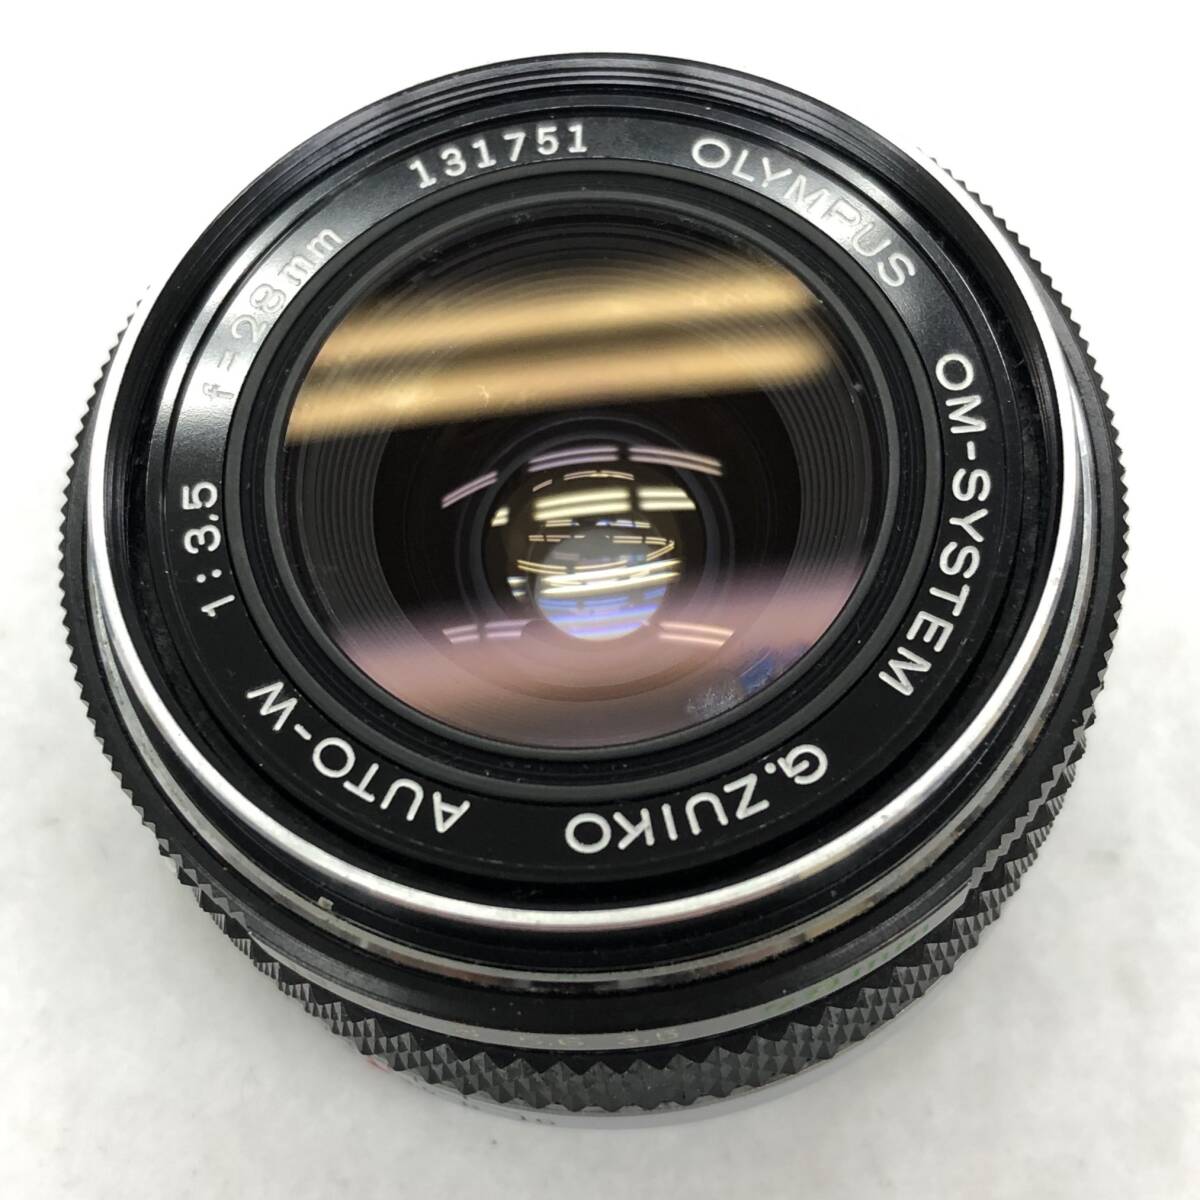 OLYMPUS / OM-SYSTEM 28mm / G.ZUIKO AUTO-W 1:3.5 f=28mm / 3.5/28 / オリンパス / 一眼カメラ用 / 単焦点レンズ / ケース他付き / 現状品_画像5